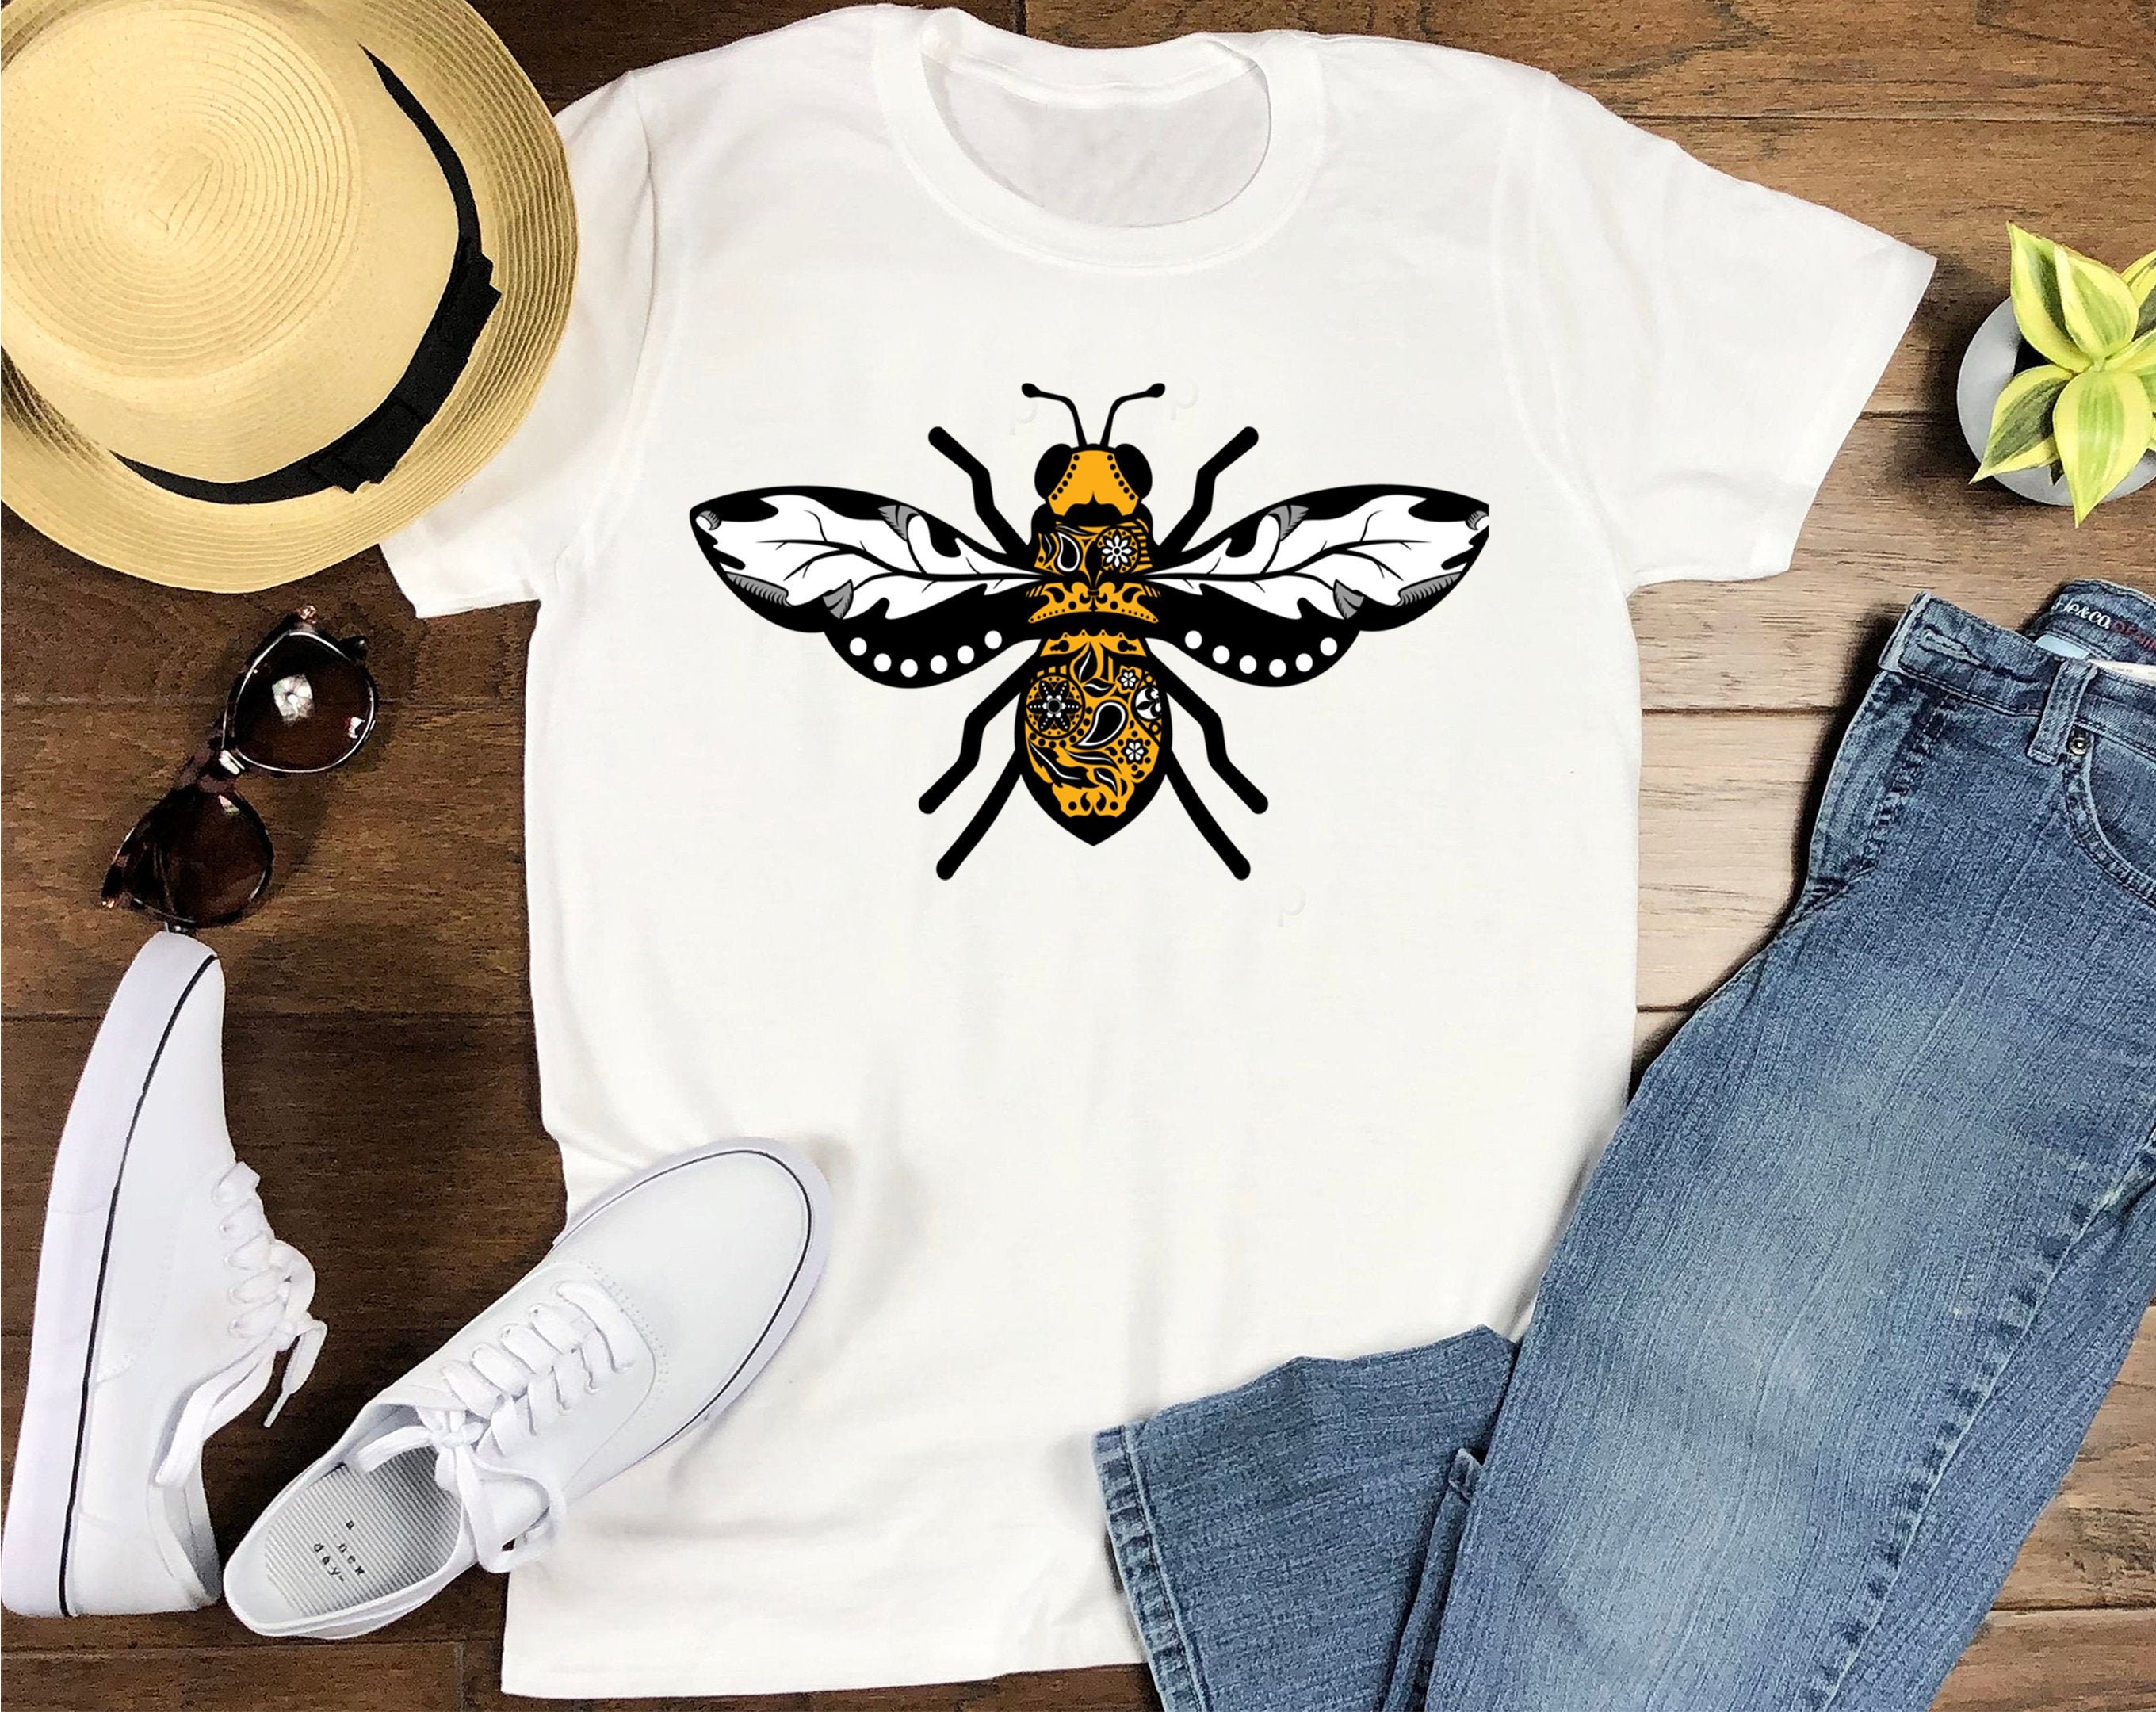 Bee Honeybee Shirt Bee Shirt Save The Bees Love T-shirt Vintage Bee T-Shirt Queen Bee Shirt Save The Bees Shirt